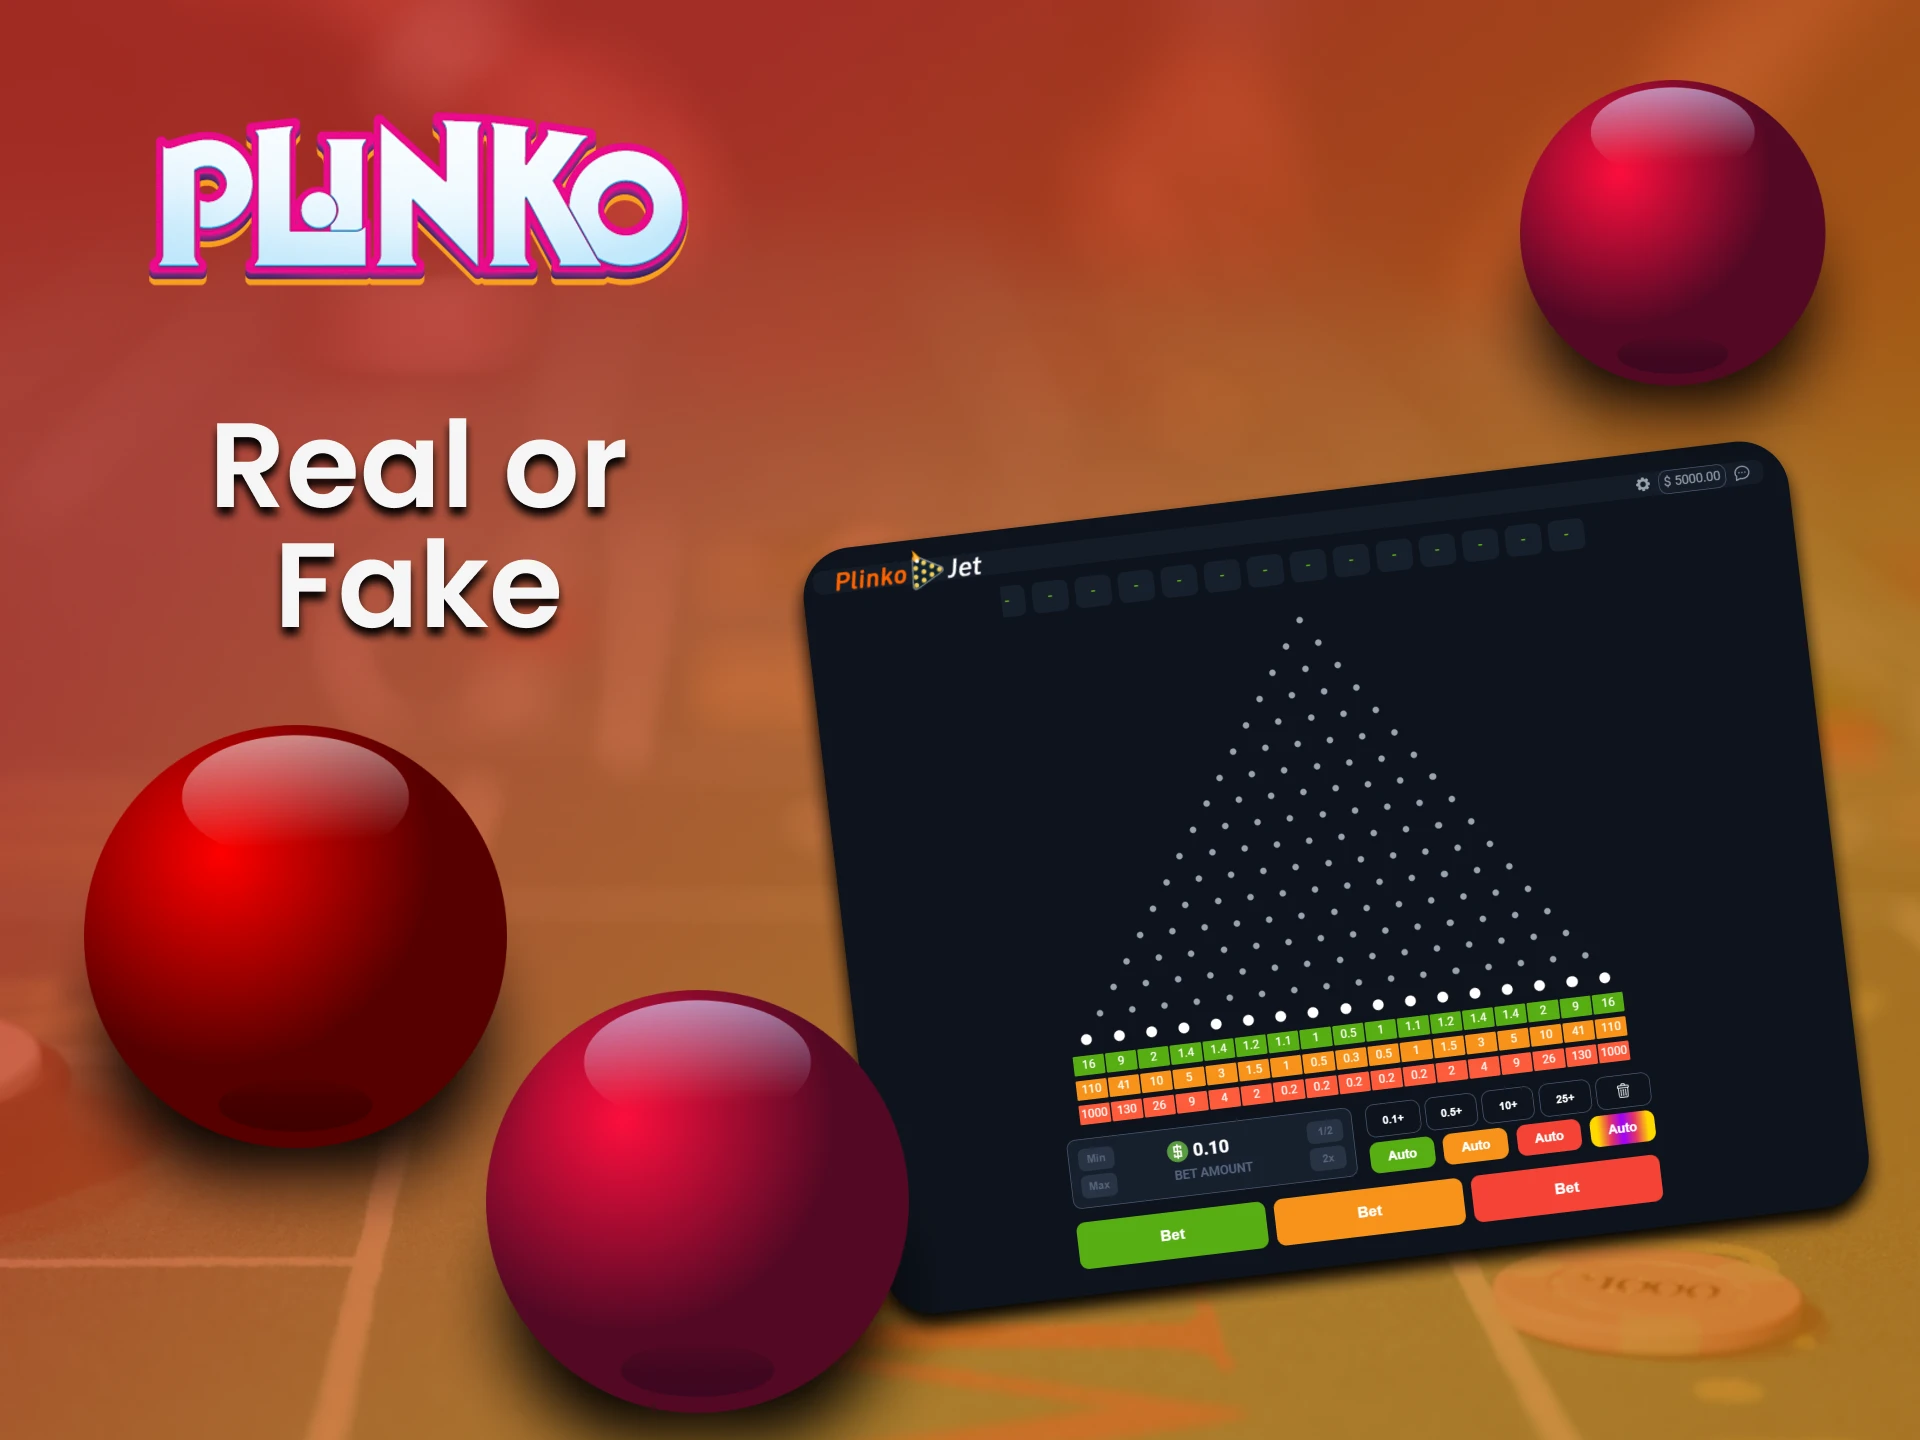 Plinko is a popular casino game for winning.